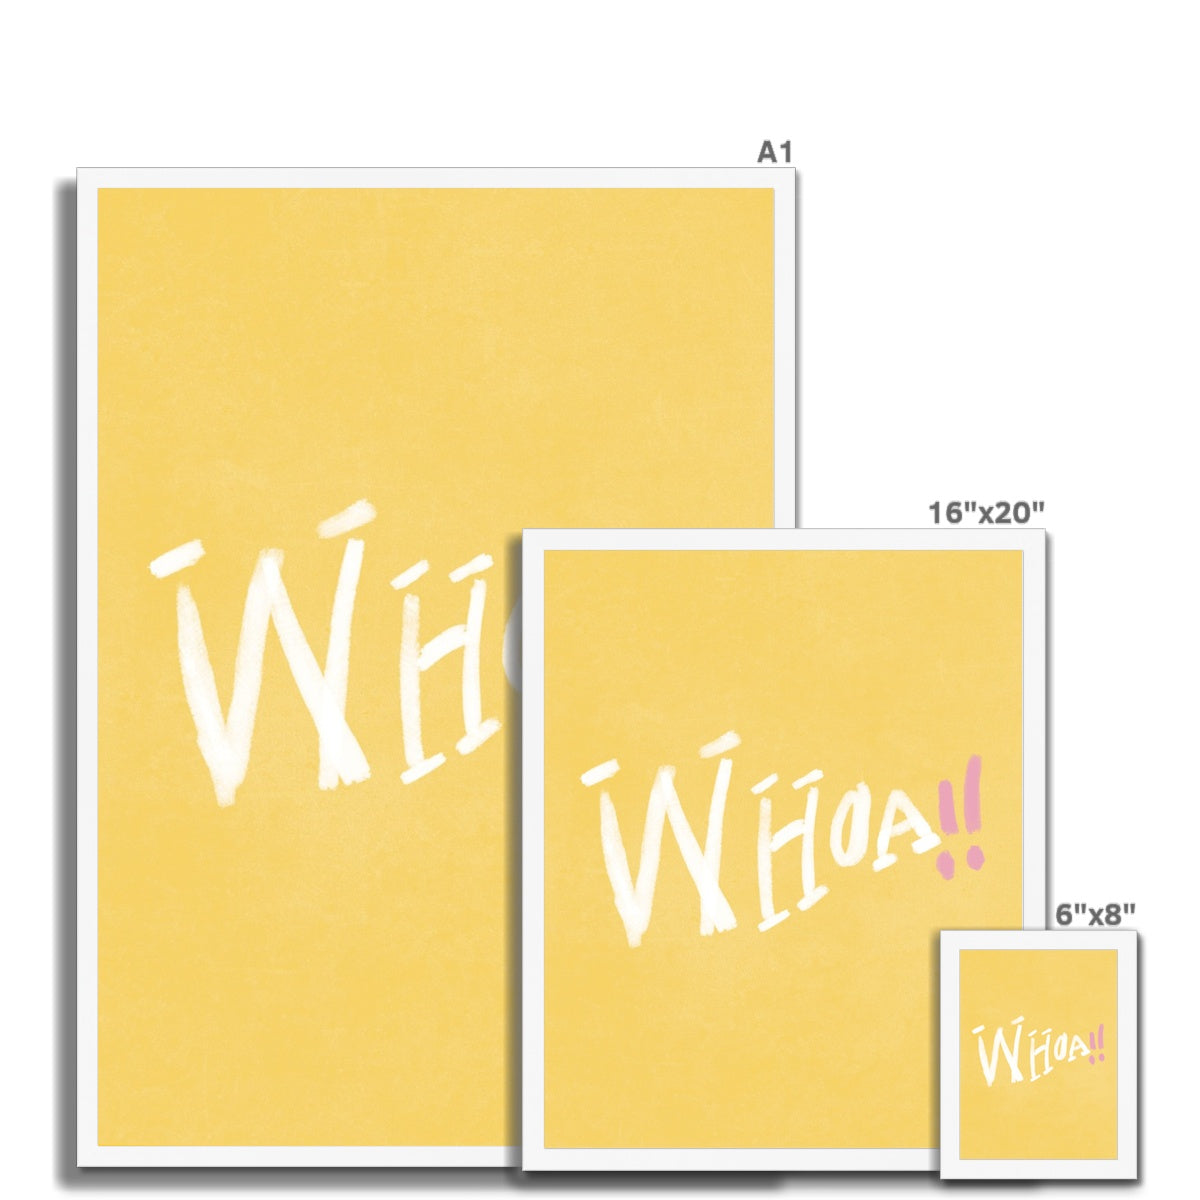 Whoa!! Print - Yellow, White, Pink Framed Print